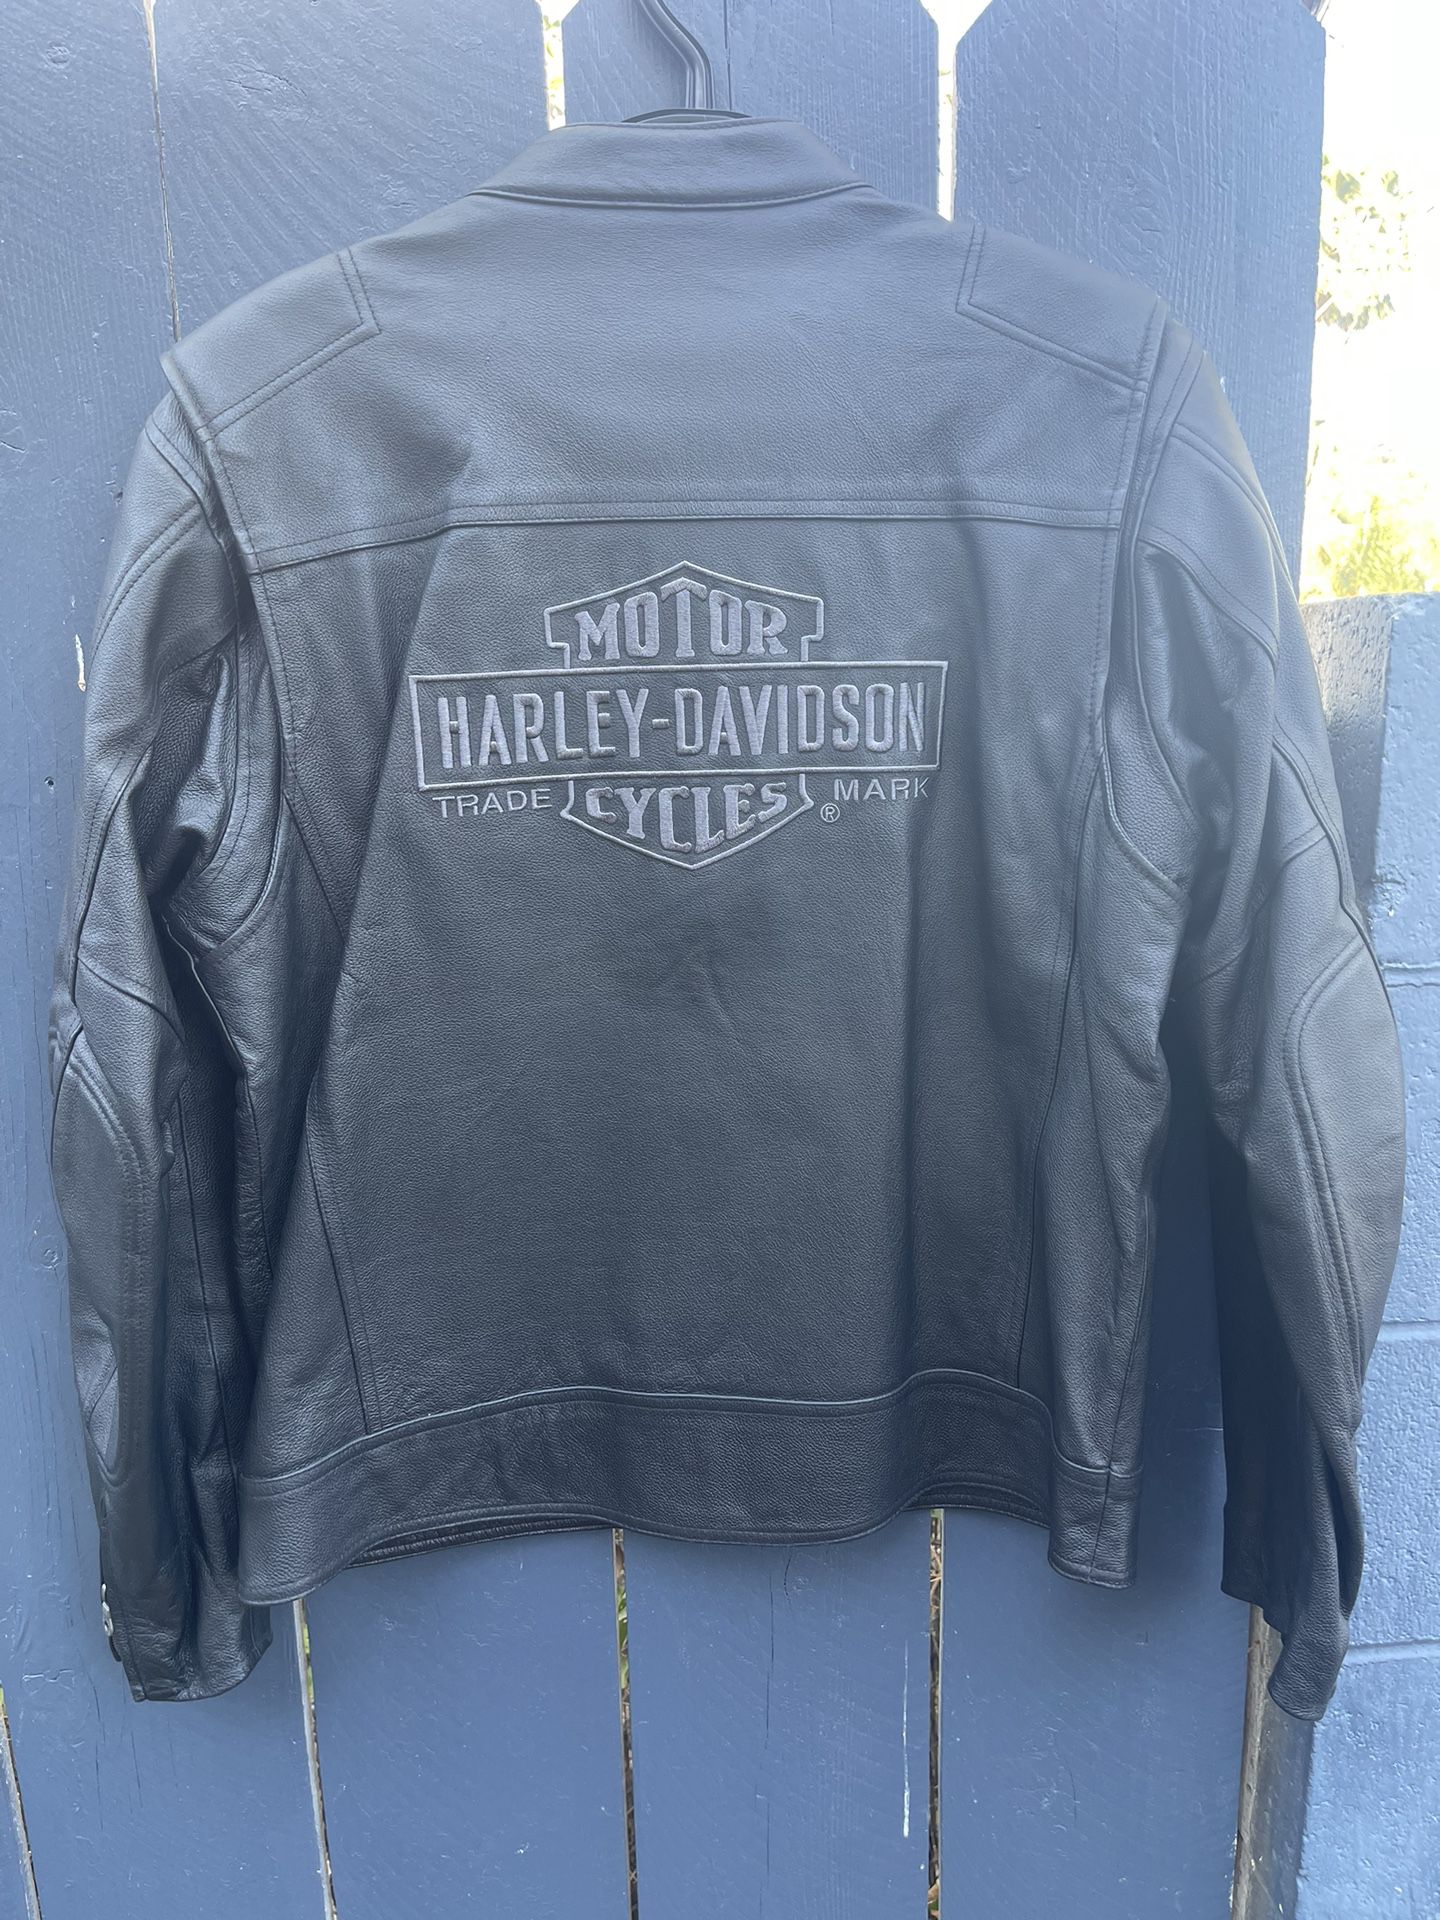 Genuine Harley Davidson Motorcycle Riding Jacket